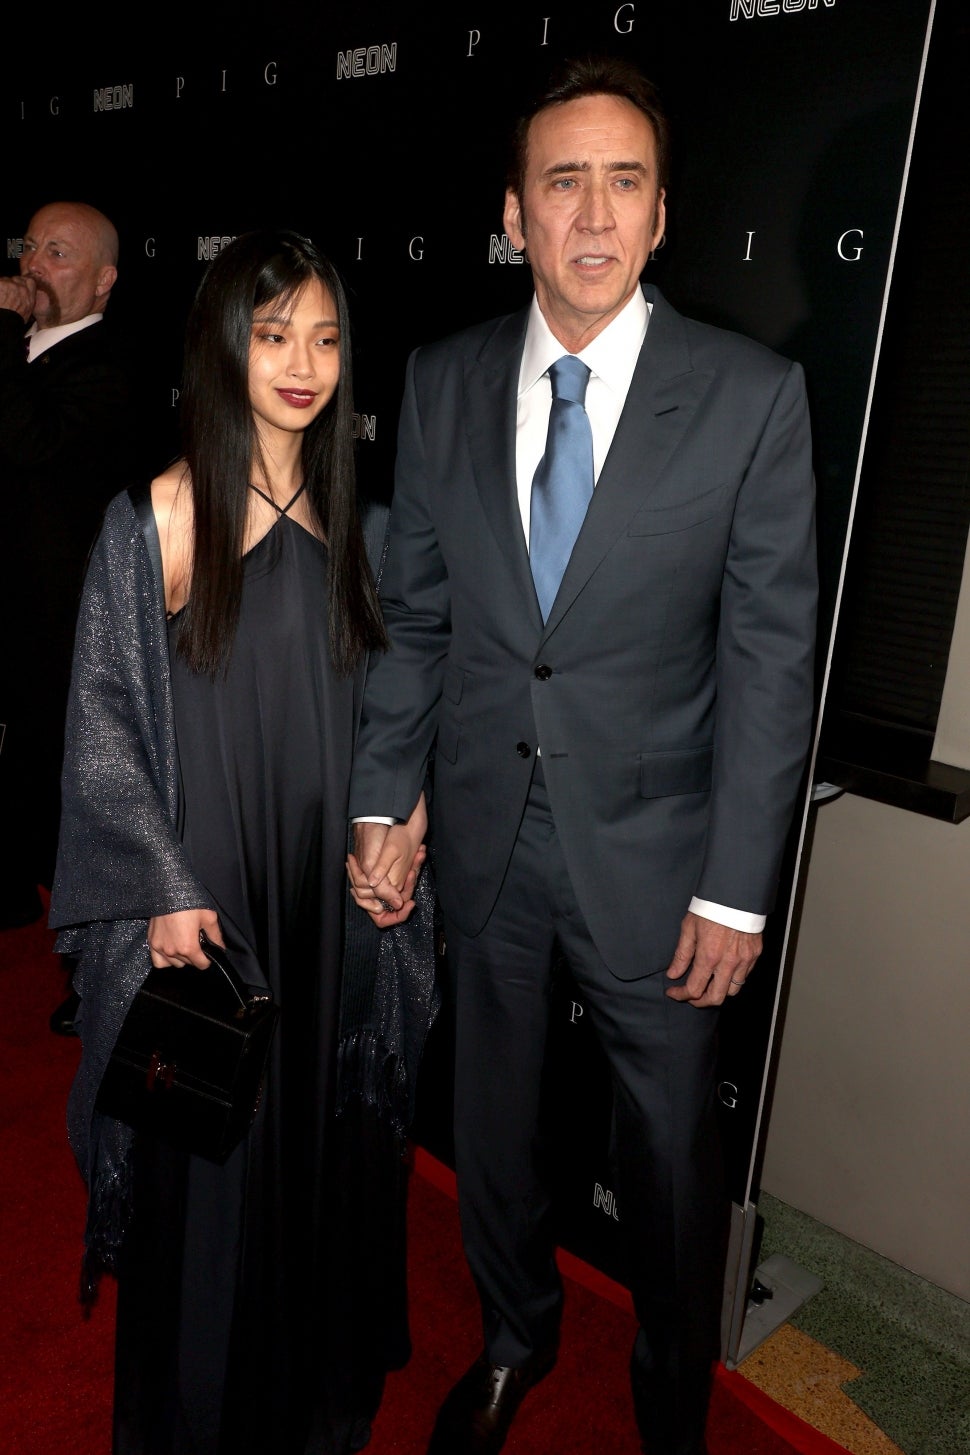 Riko Shibata and Nicolas Cage attend the Los Angeles premiere of Neon's "Pig" at Nuart Theatre